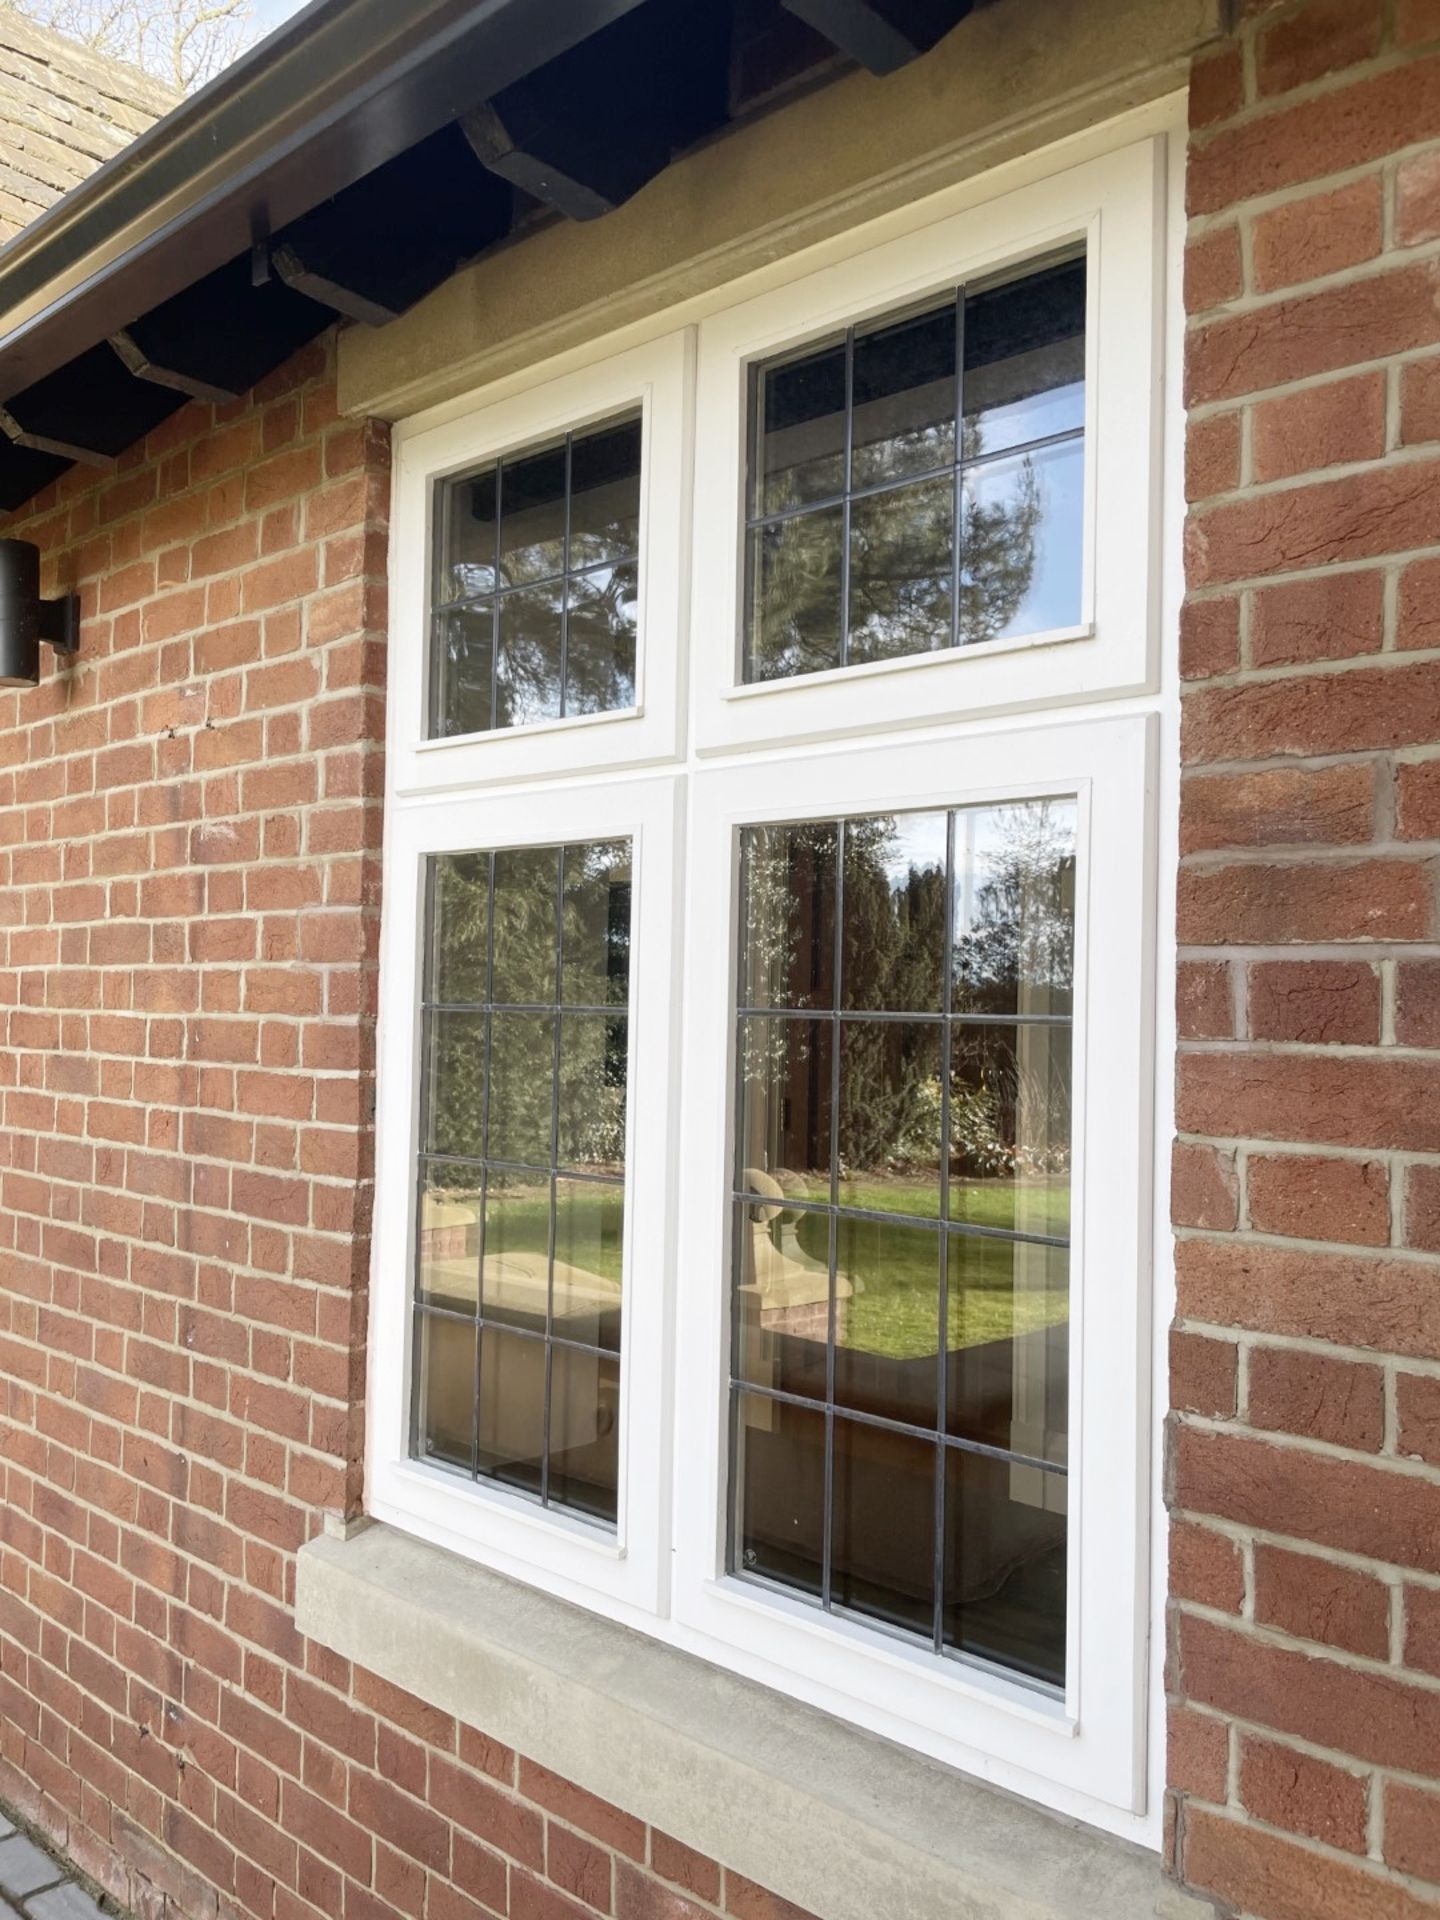 1 x Hardwood Timber Double Glazed Leaded 4-Pane Window Frame - Ref: PAN206 - CL896 - NO VAT - Image 3 of 12